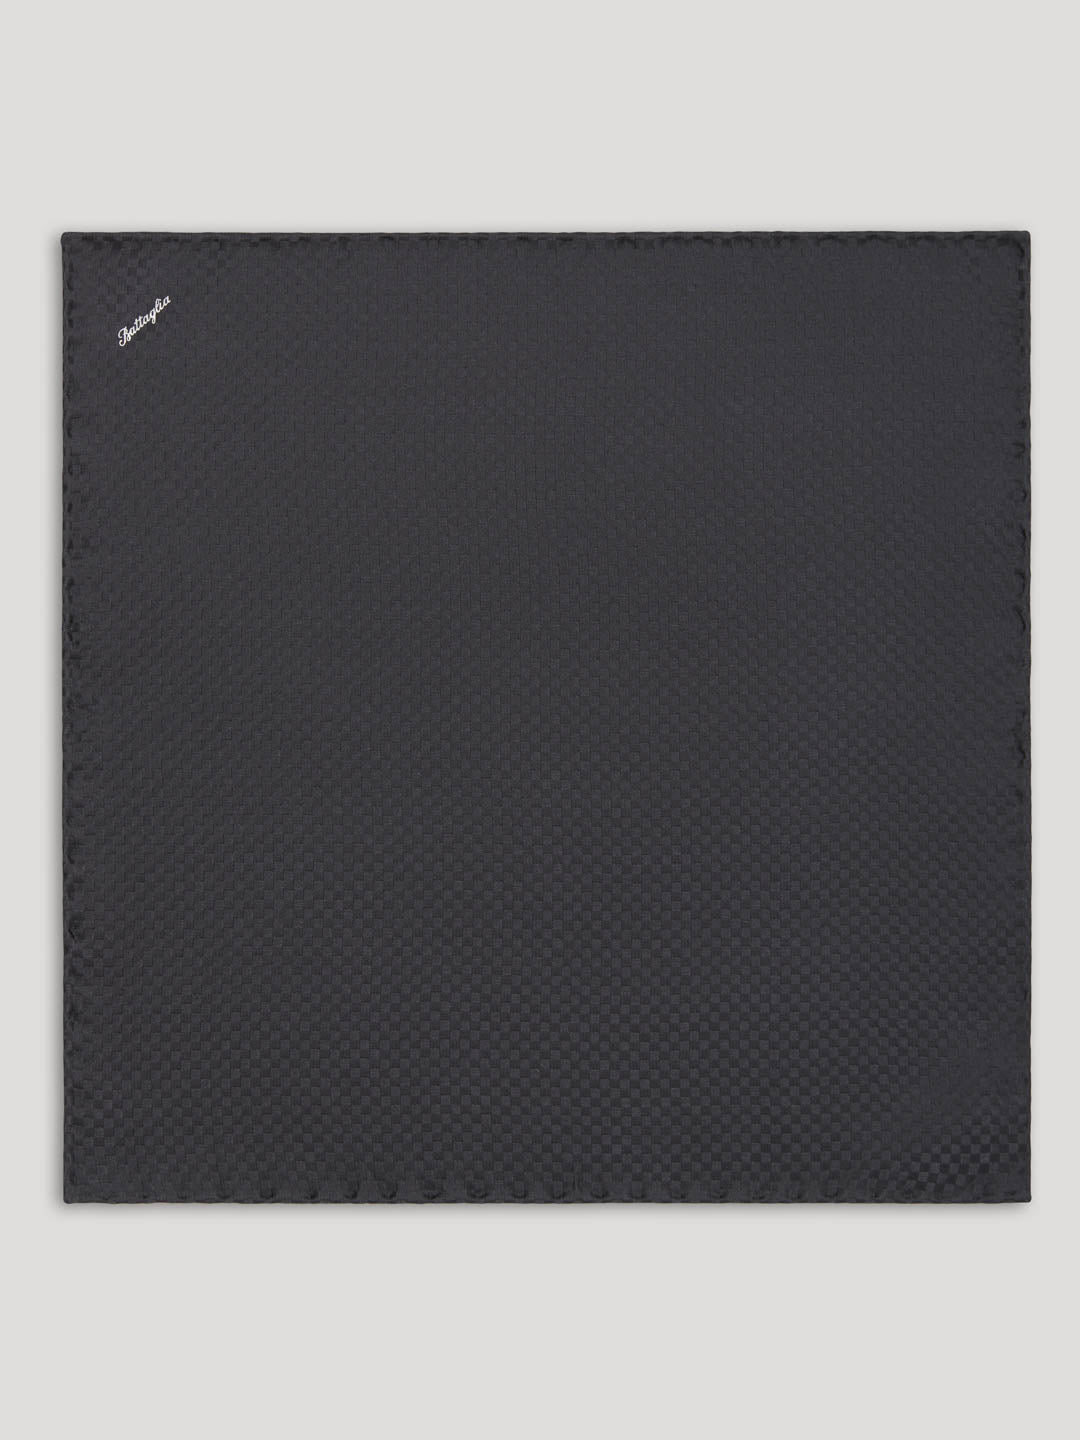 Black silk handkerchief with check pattern. 